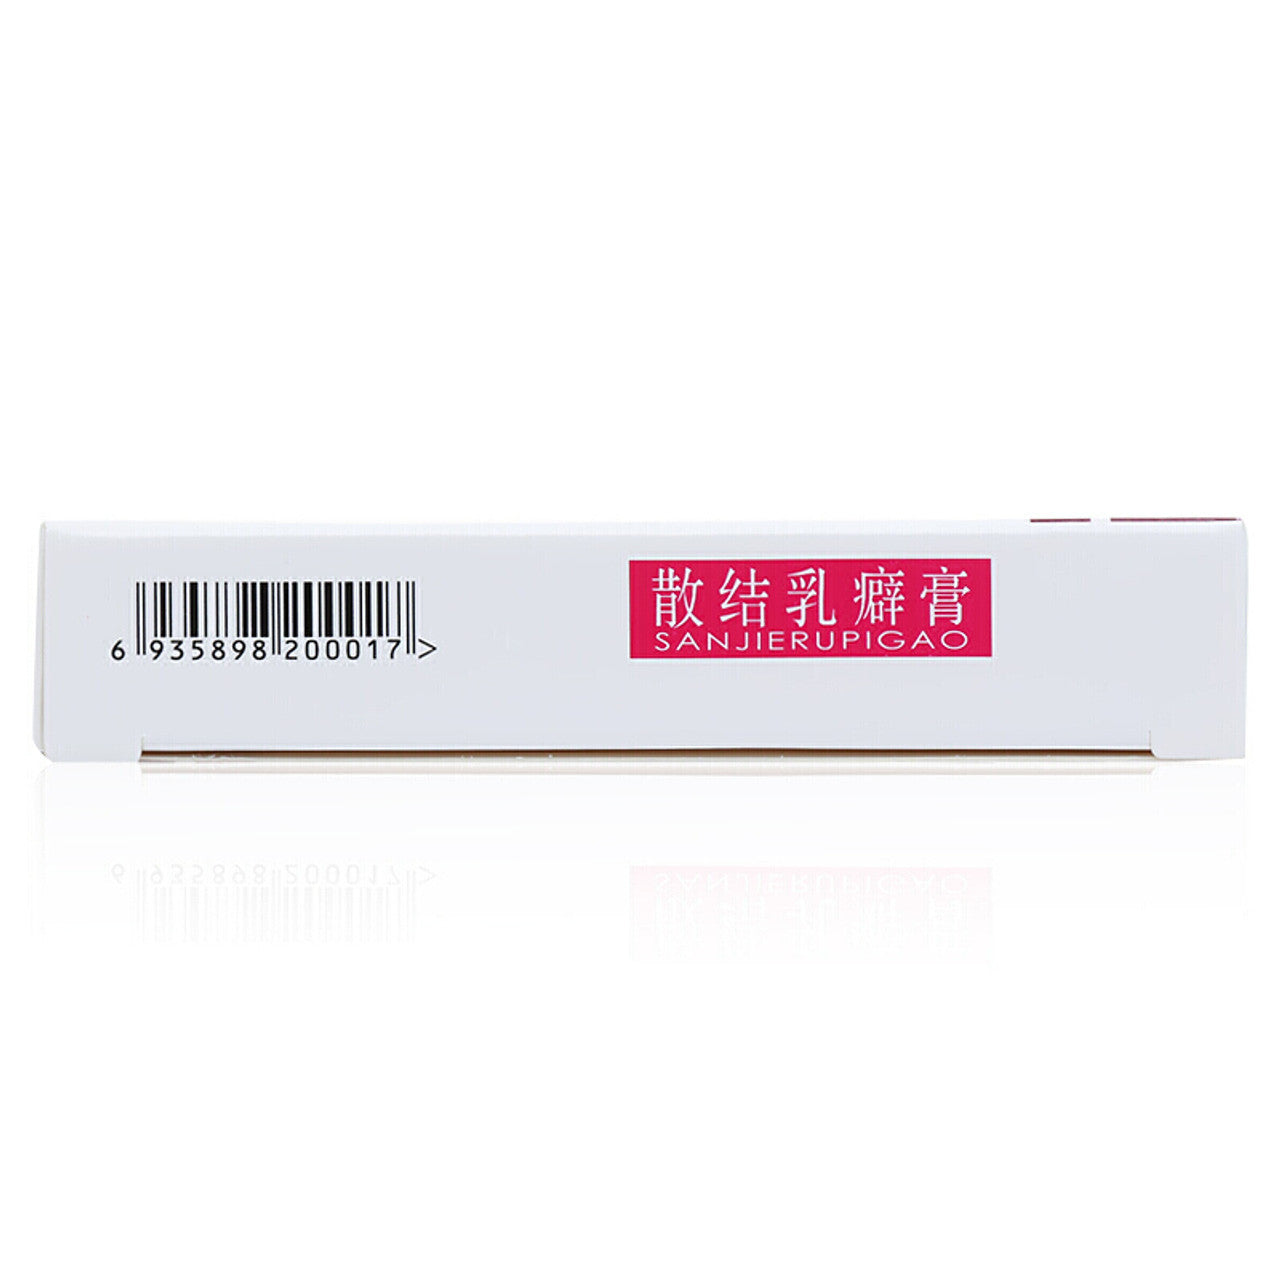 China Herb. External Use Plaster. Sanjie Rupi Gao or Sanjie Rupi Plaster for cystic hyperplasia of the breast. San Jie Ru Pi Gao